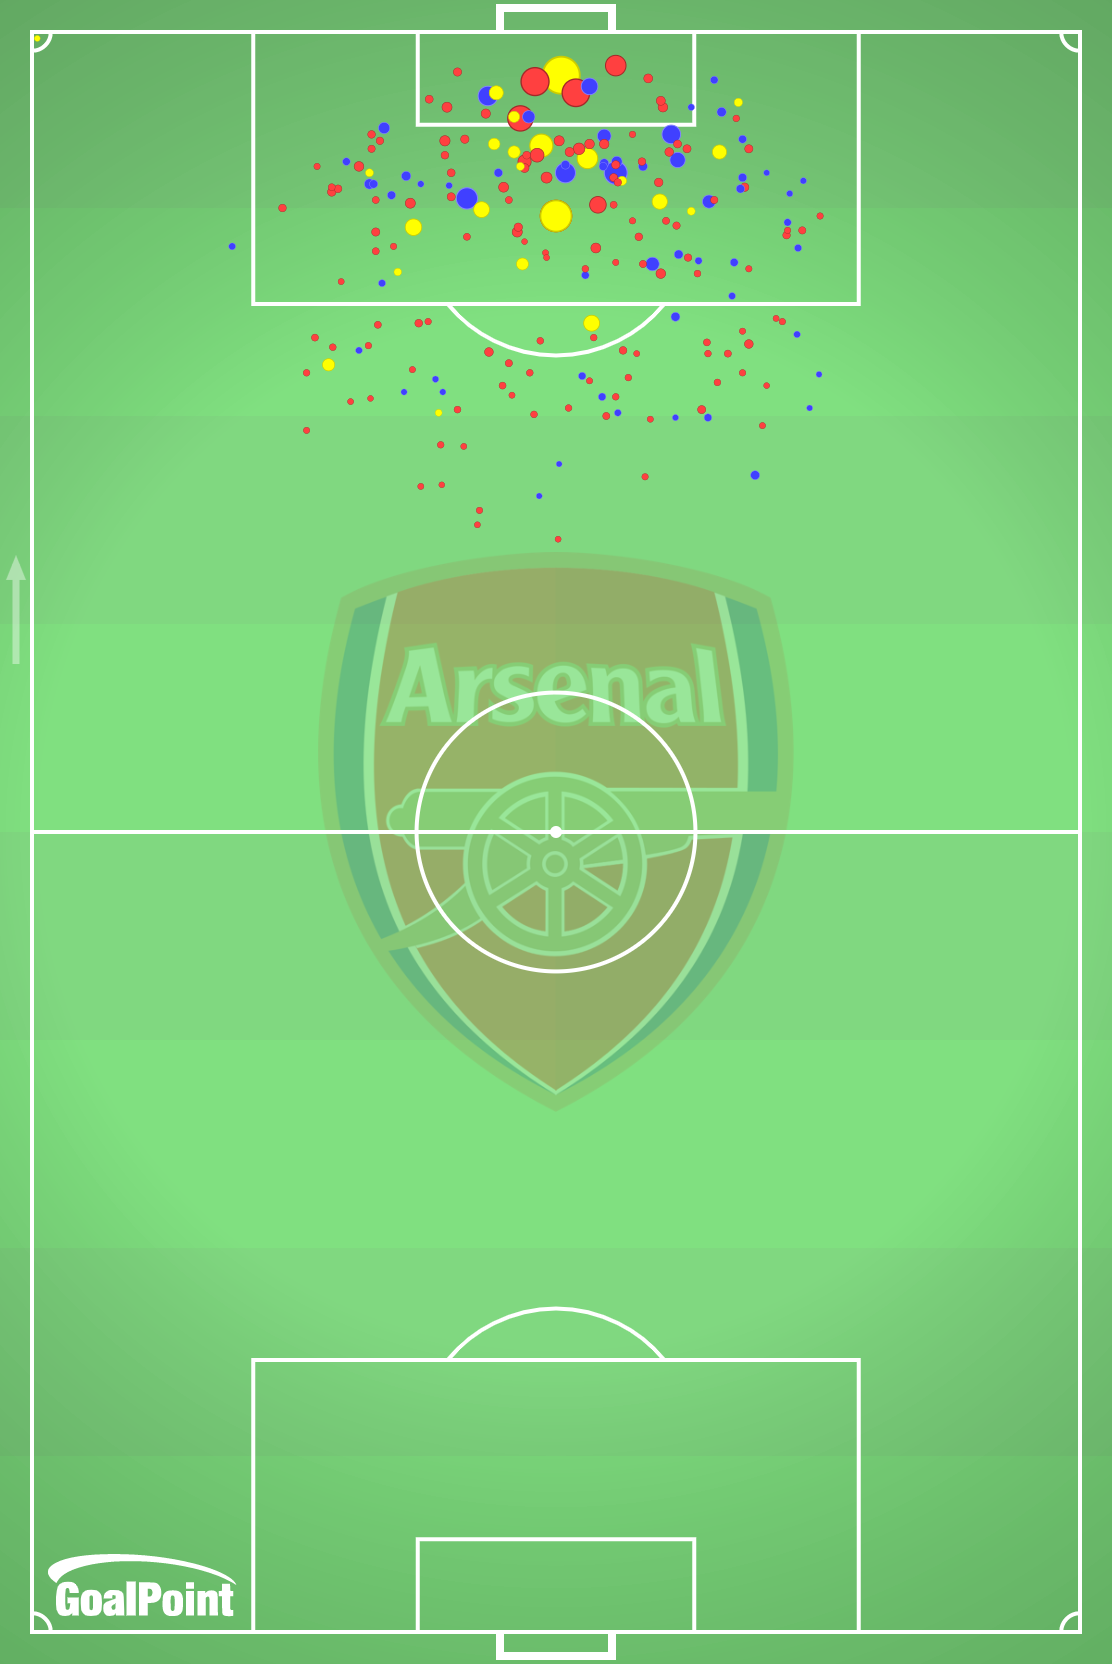 GoalPoint-Arsenal-Remates-xG-Contra-EPL-202223